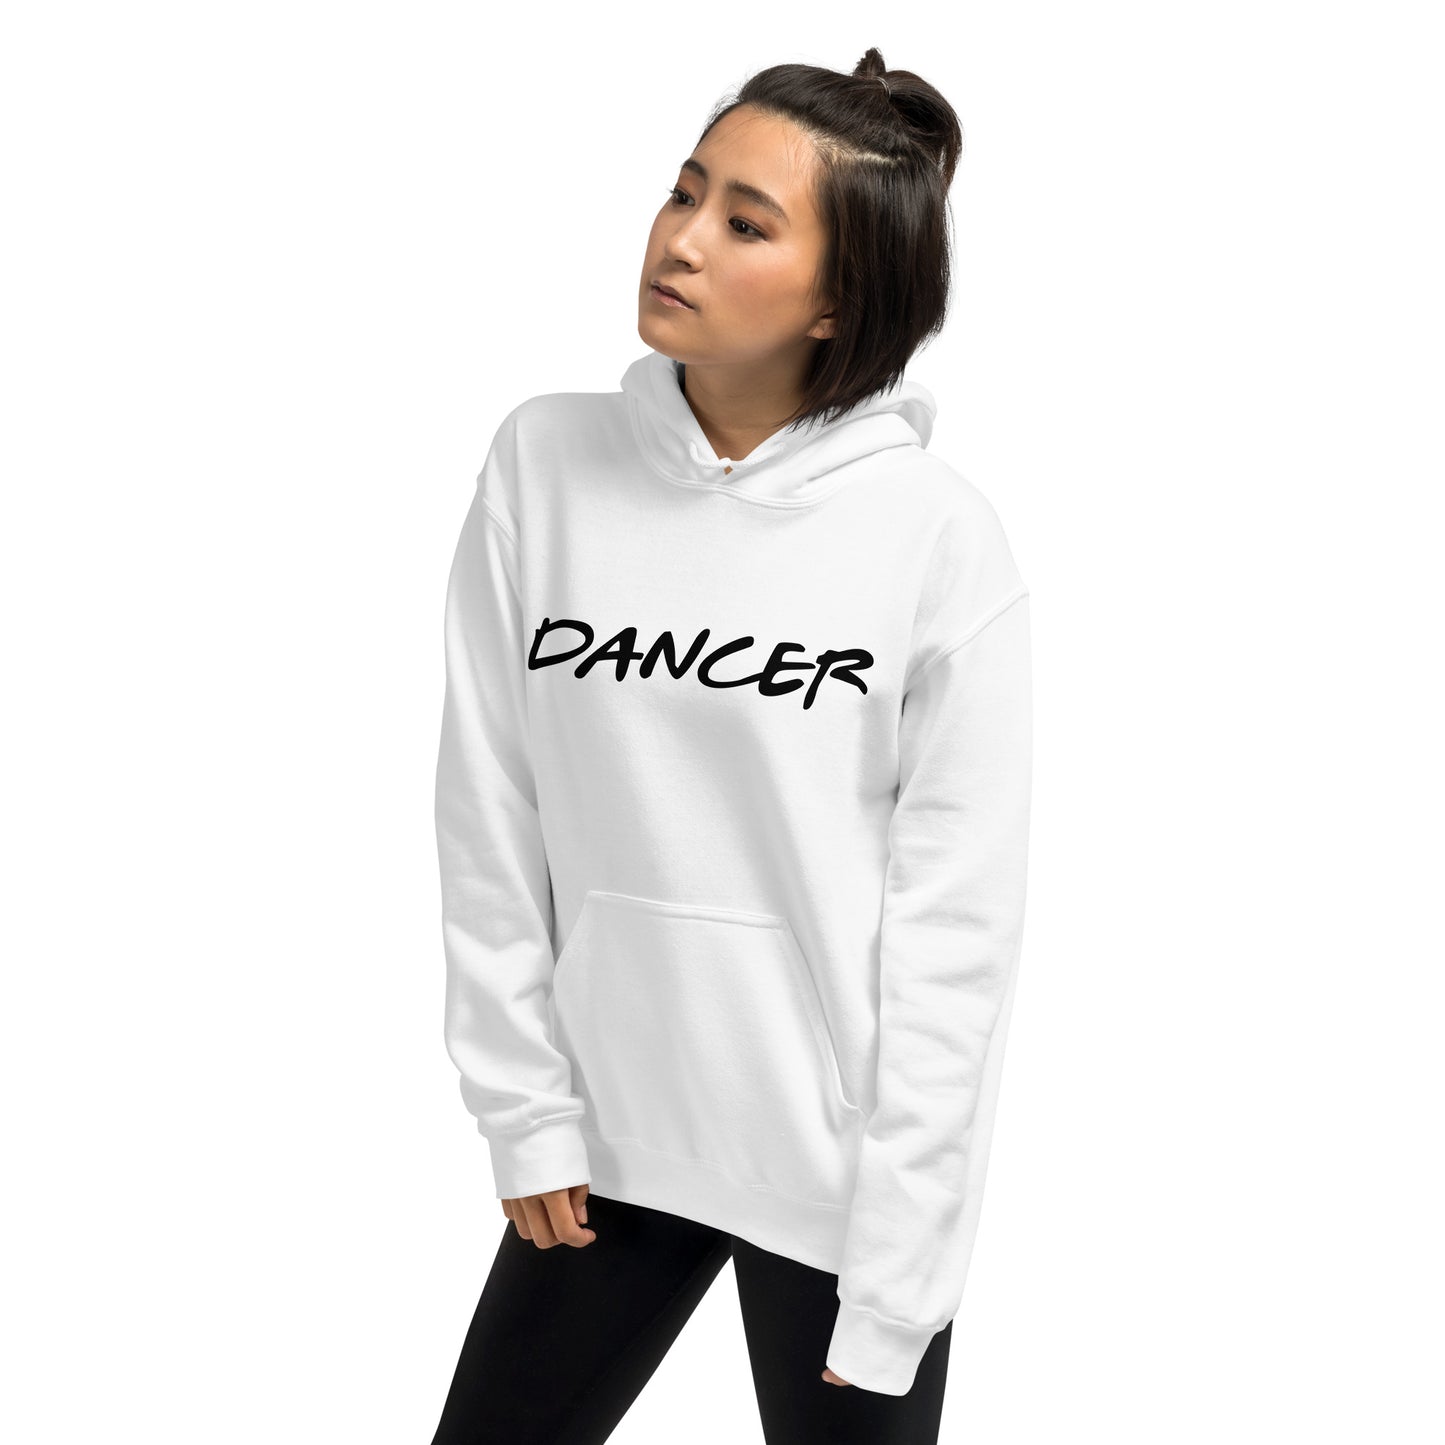 Dancer Hooded Sweatshirt - SD-style-shop